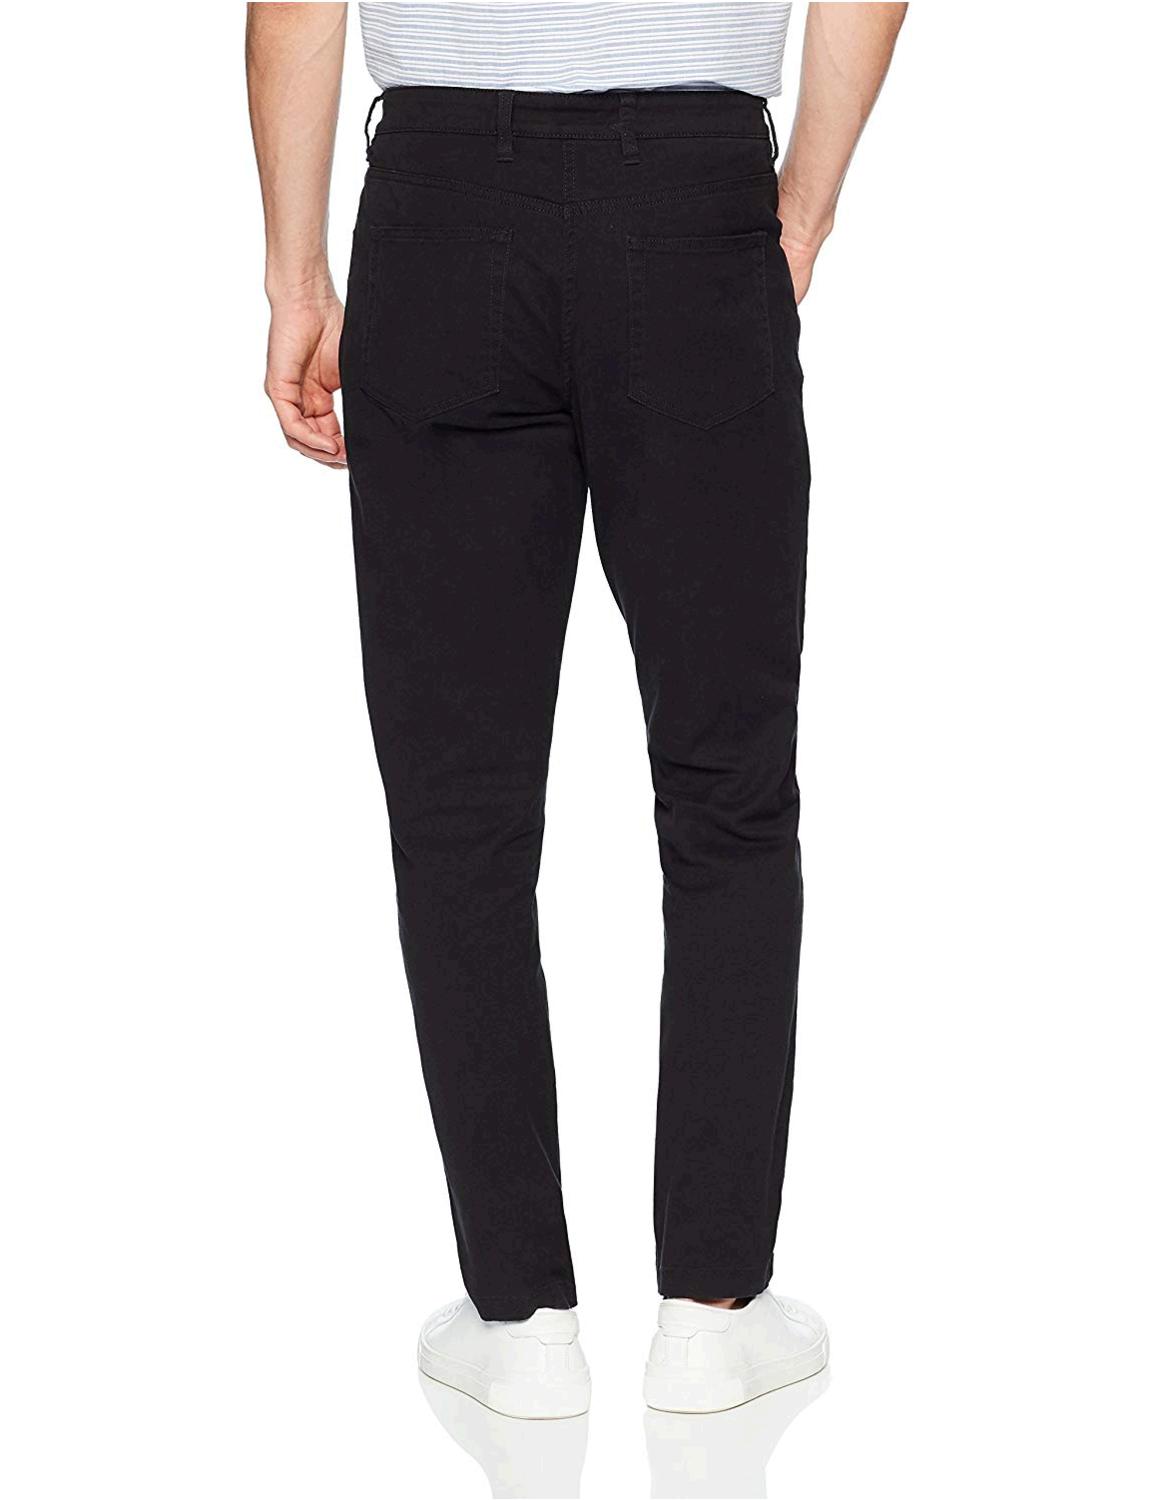 Goodthreads Men's Slim-Fit 5-Pocket Chino Pant, Black,, Black, Size 28W ...